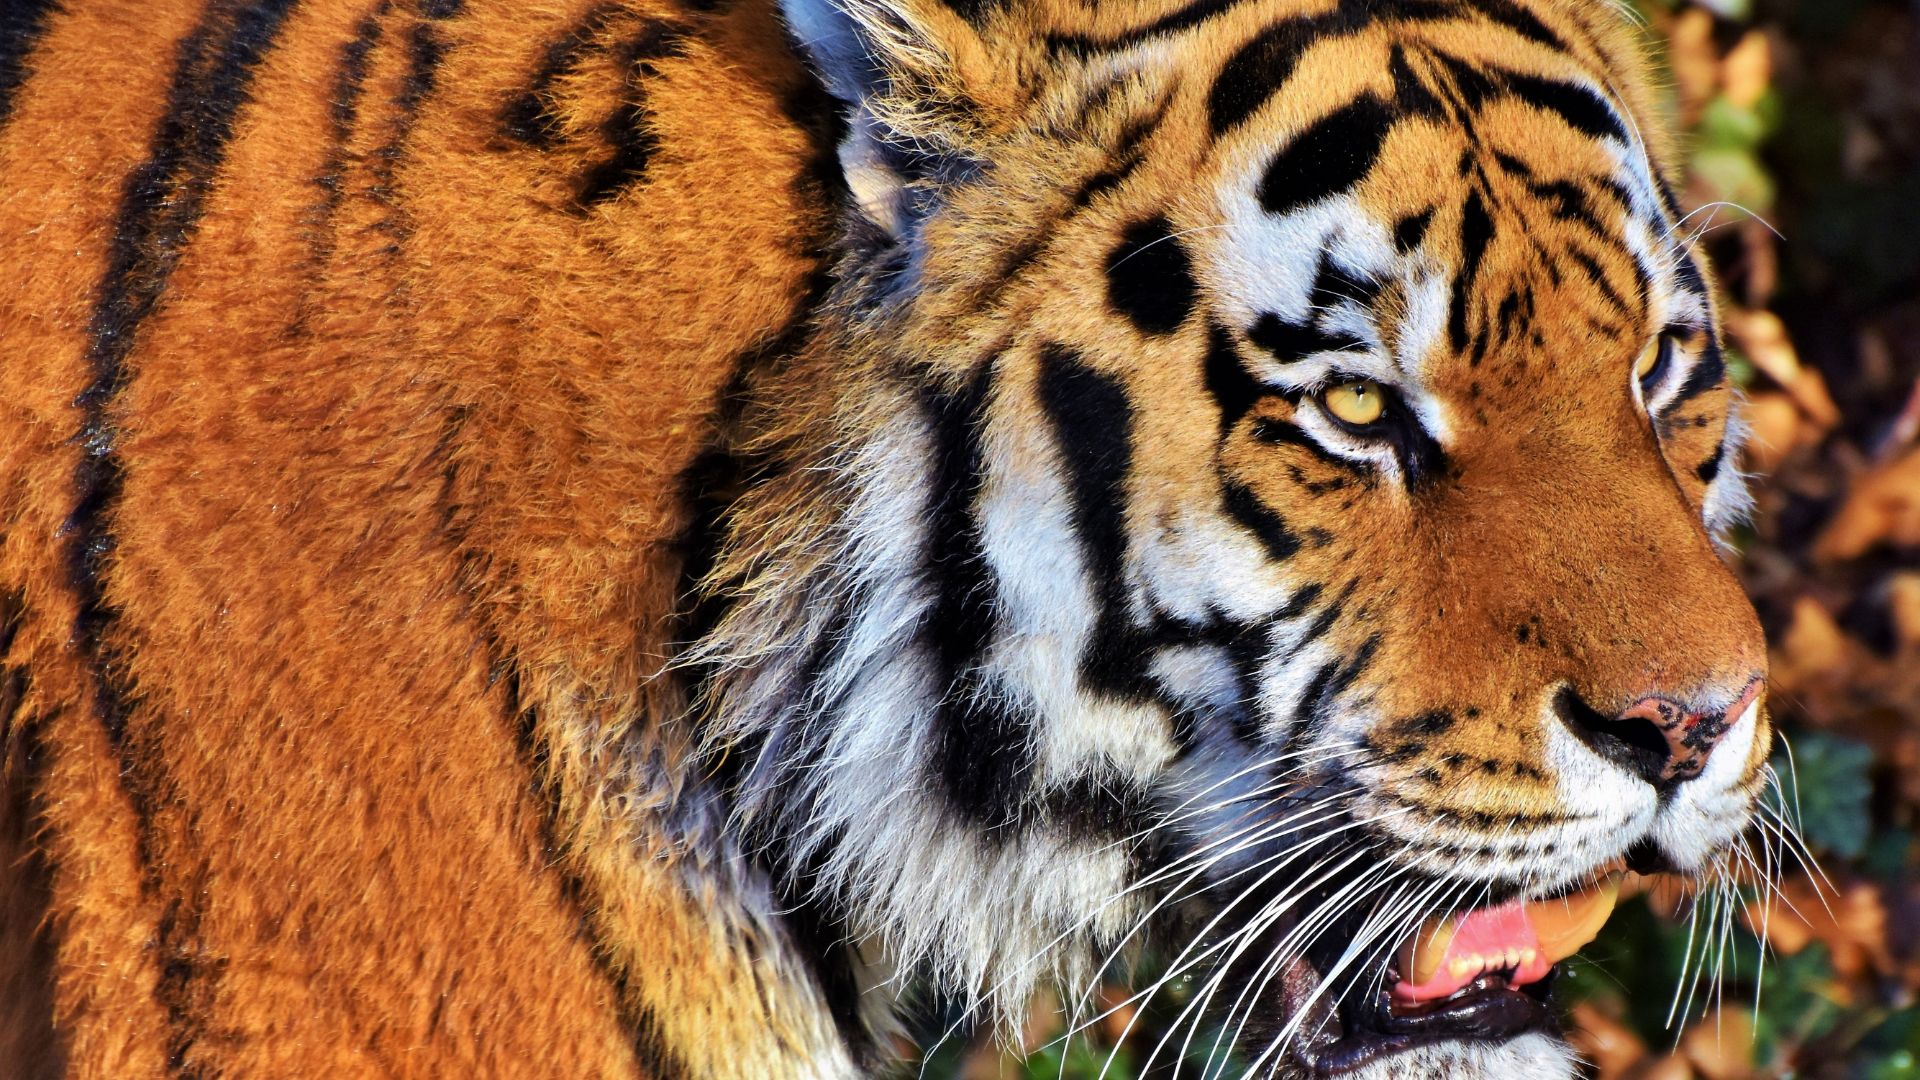 wild animal wallpapers hd 1080p free download for desktop (39)